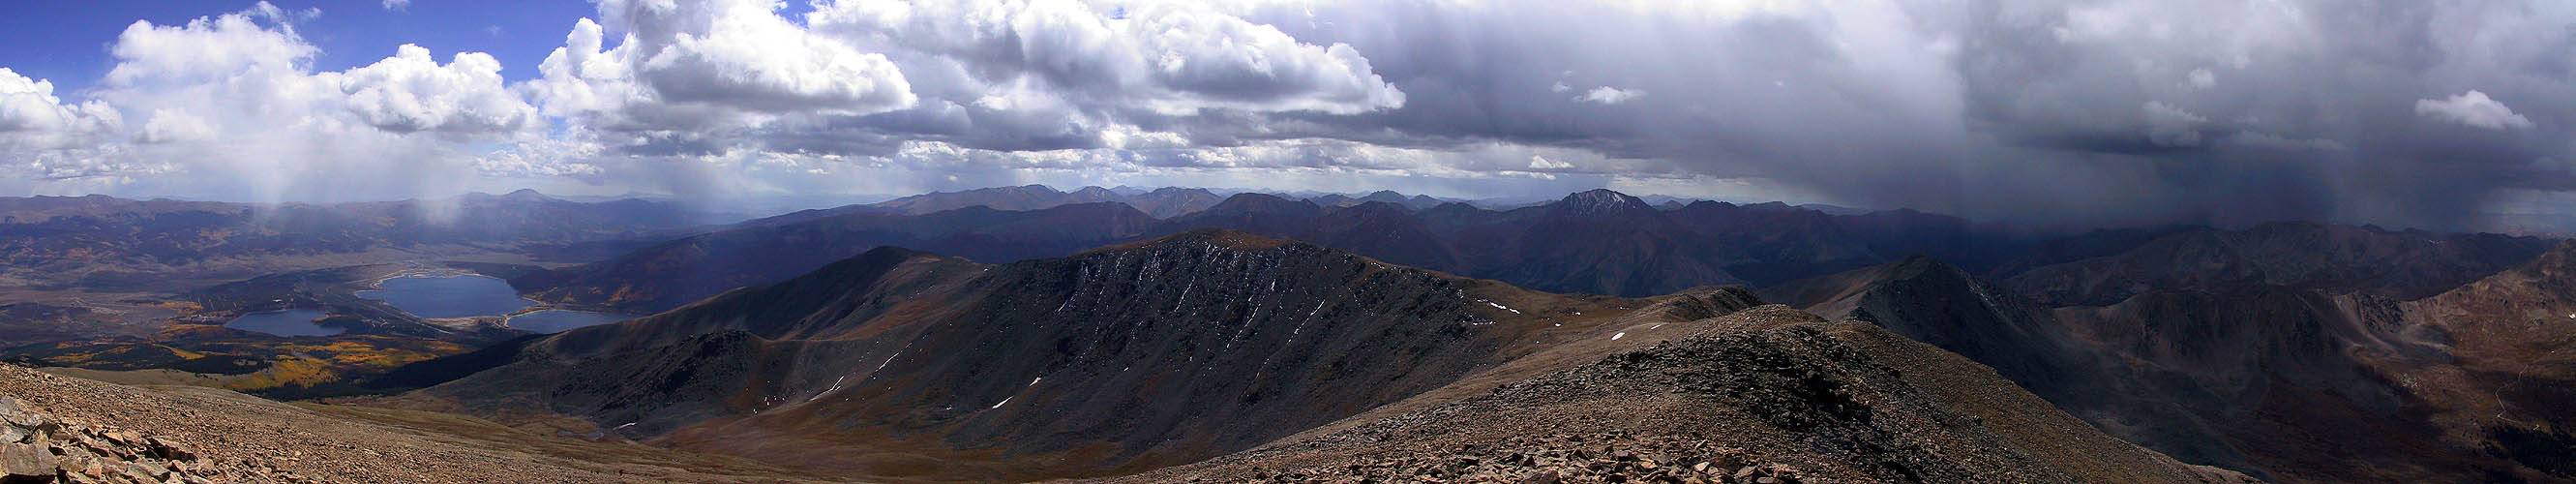 Mt Elbert 2001: Summit Panoramic South